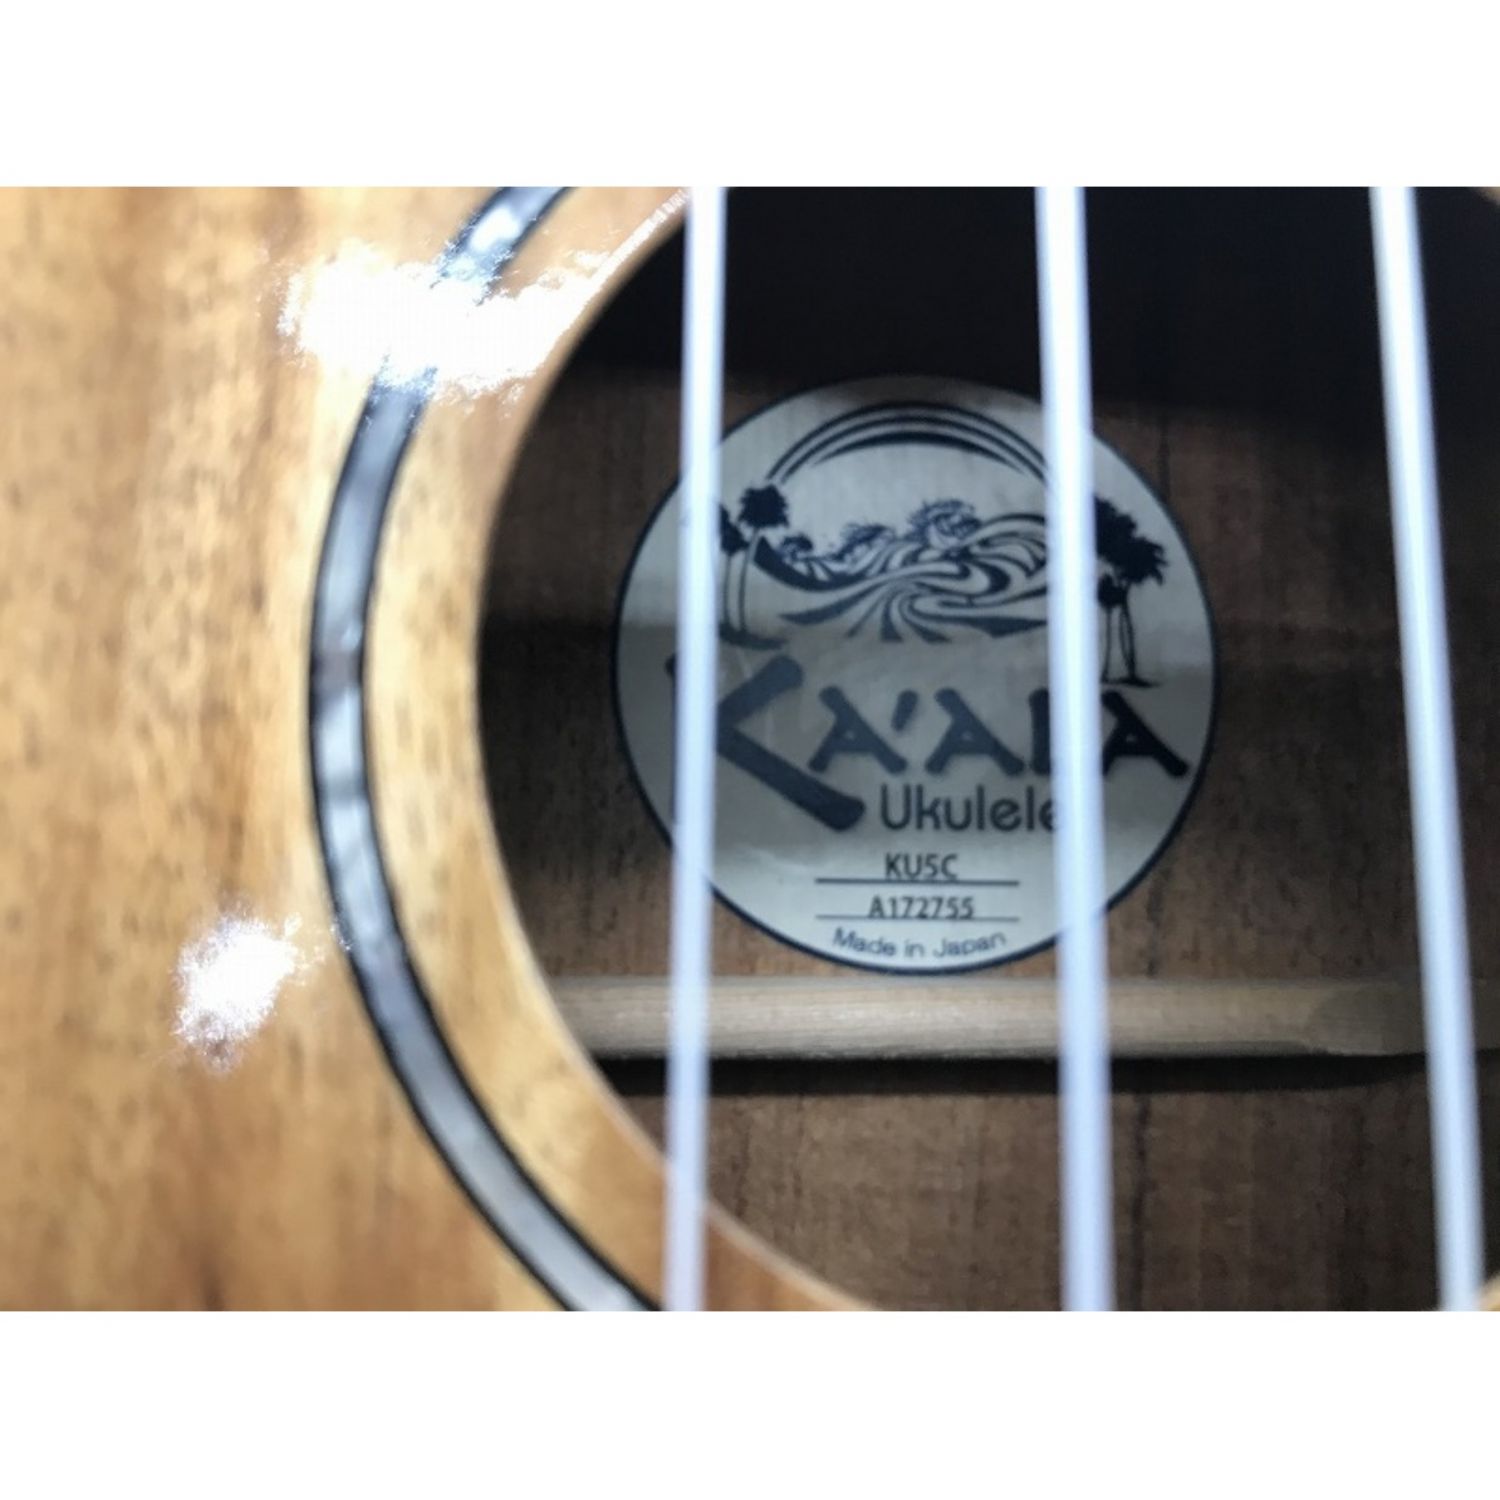 KAALA (カアラ) ウクレレ KU5C 世界で一番幸せになれる楽器を国産 